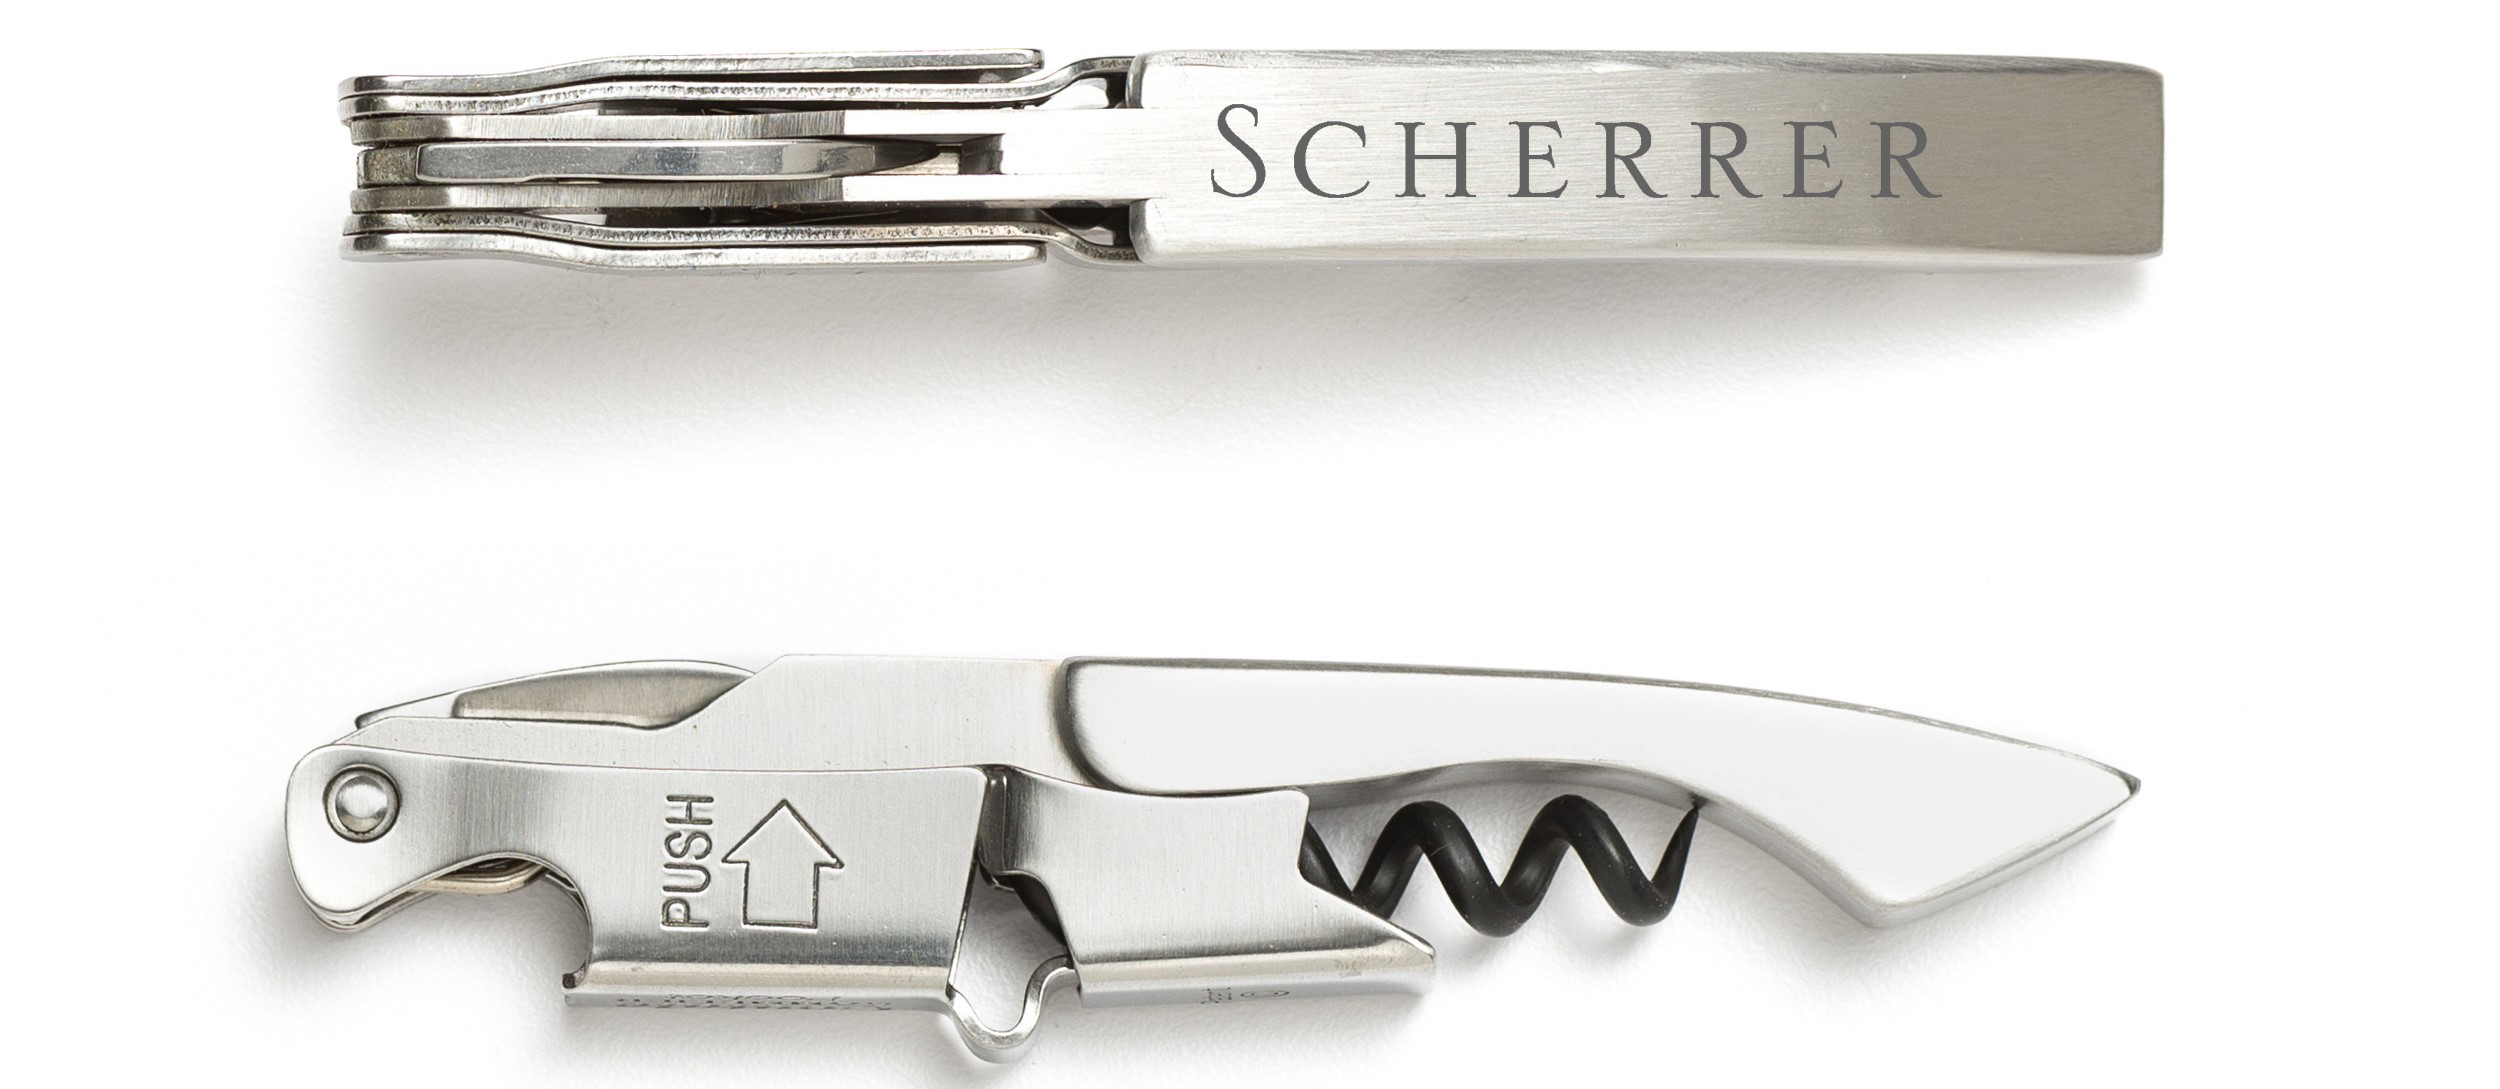 corkscrew with Scherrer engraving